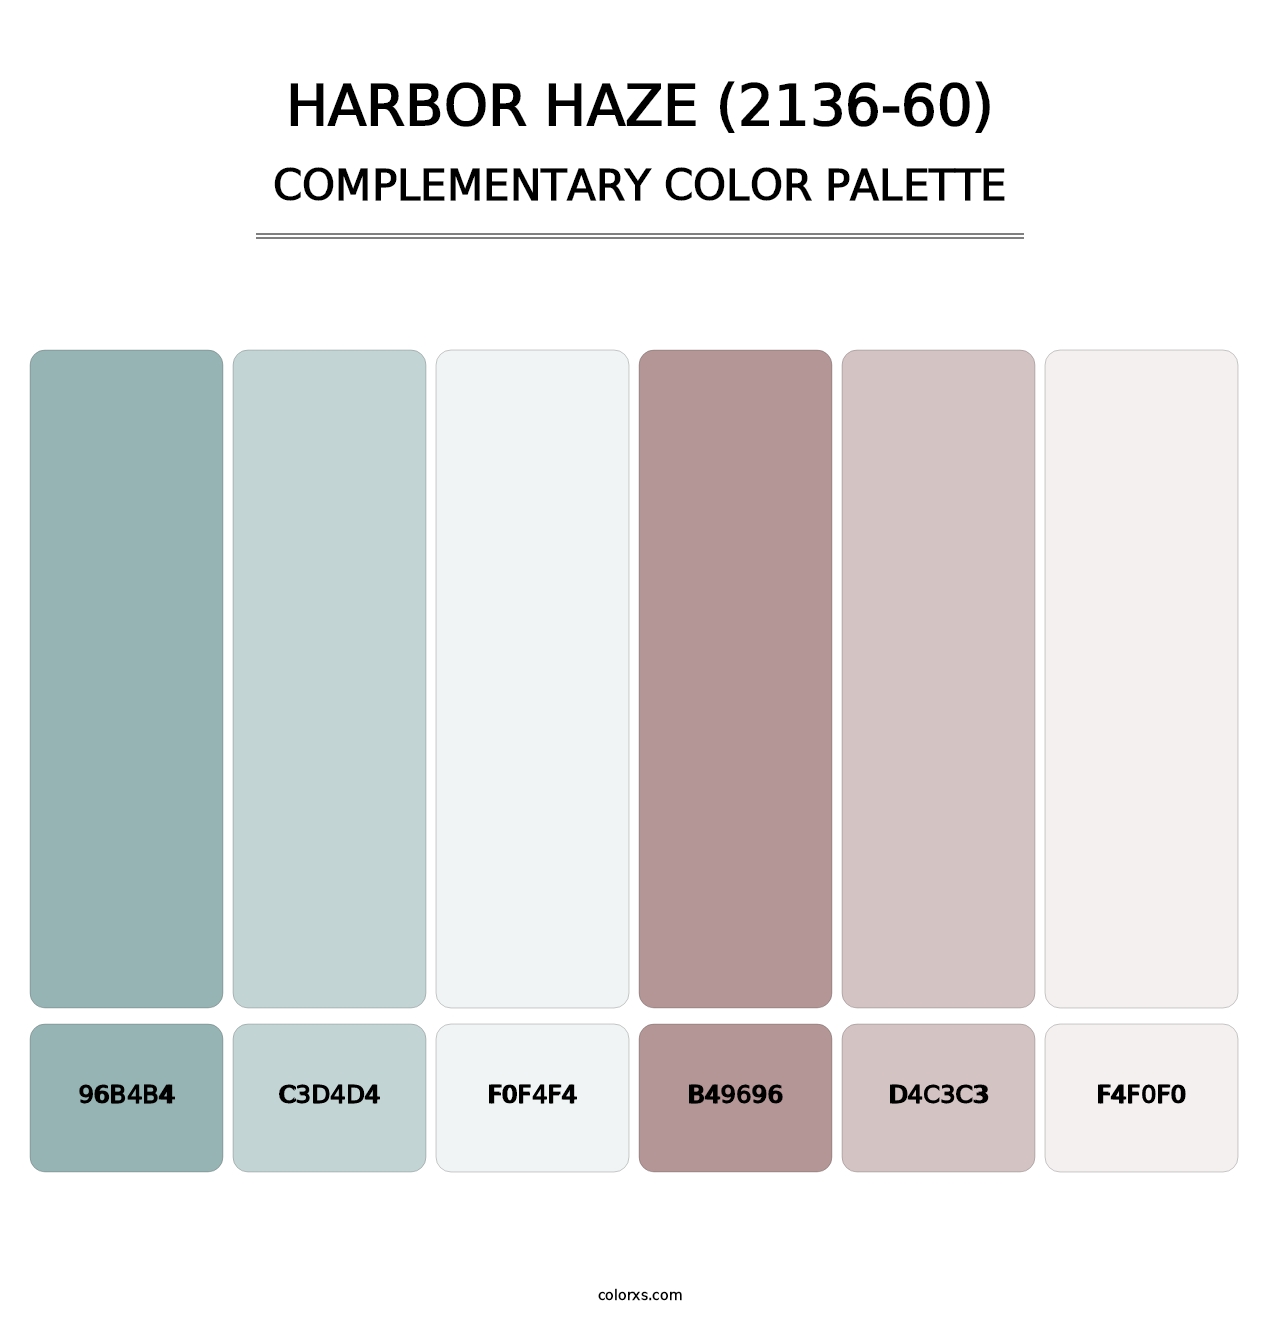 Harbor Haze (2136-60) - Complementary Color Palette